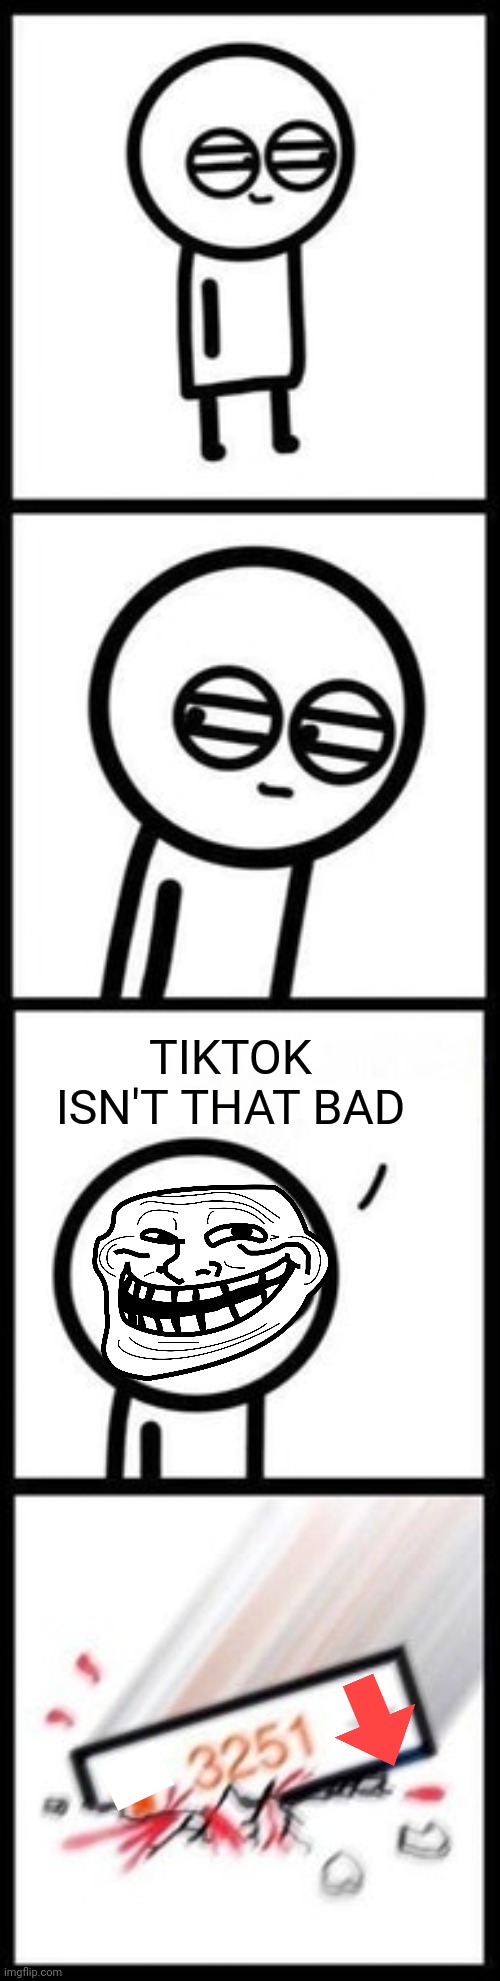 Only Tiktok dances suck | TIKTOK ISN'T THAT BAD | image tagged in 3251 upvotes,tik tok,downvote,troll face,imgflip | made w/ Imgflip meme maker